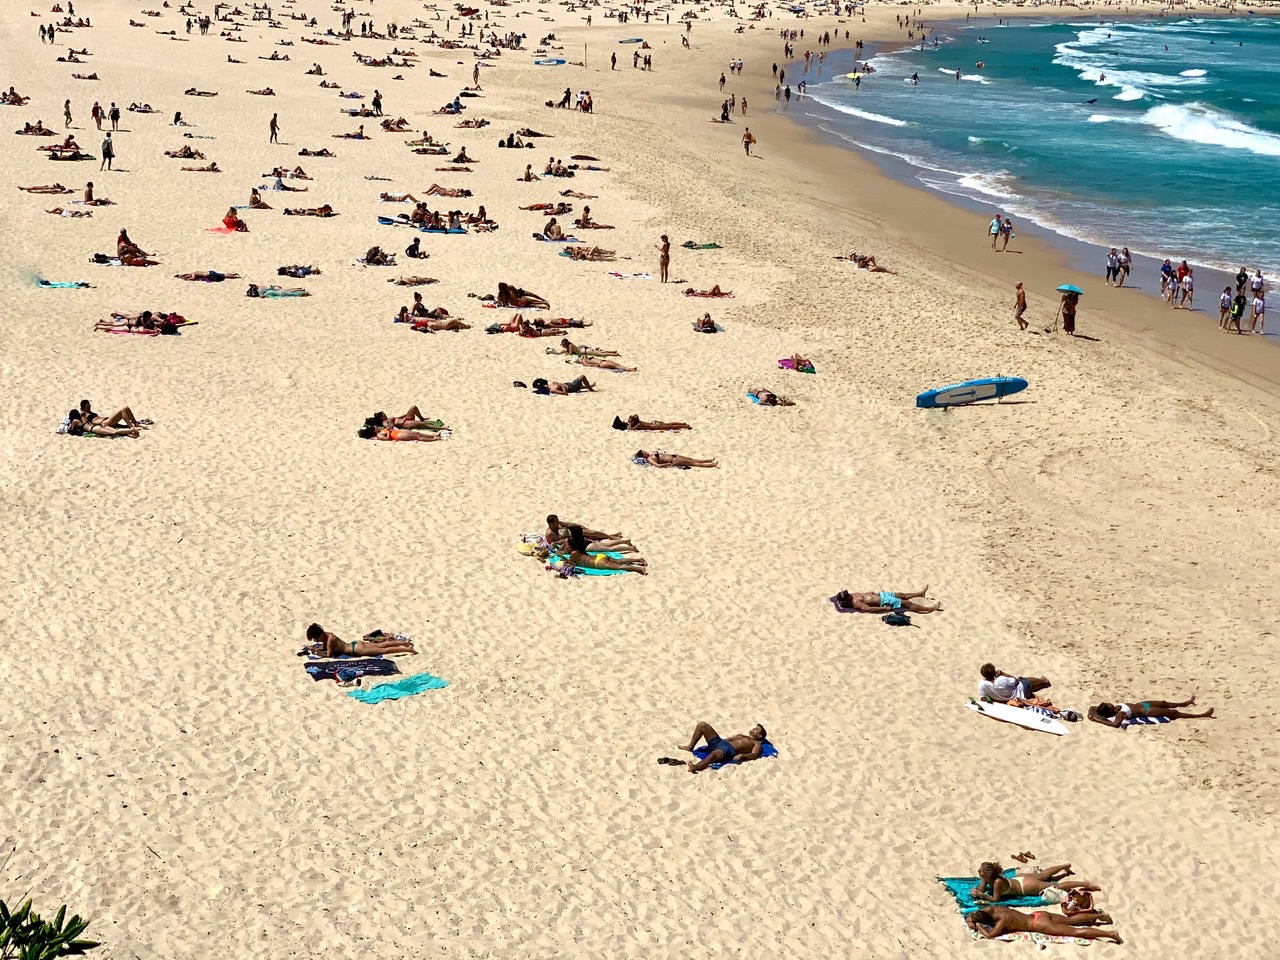 Bondi Beach and the bathers.